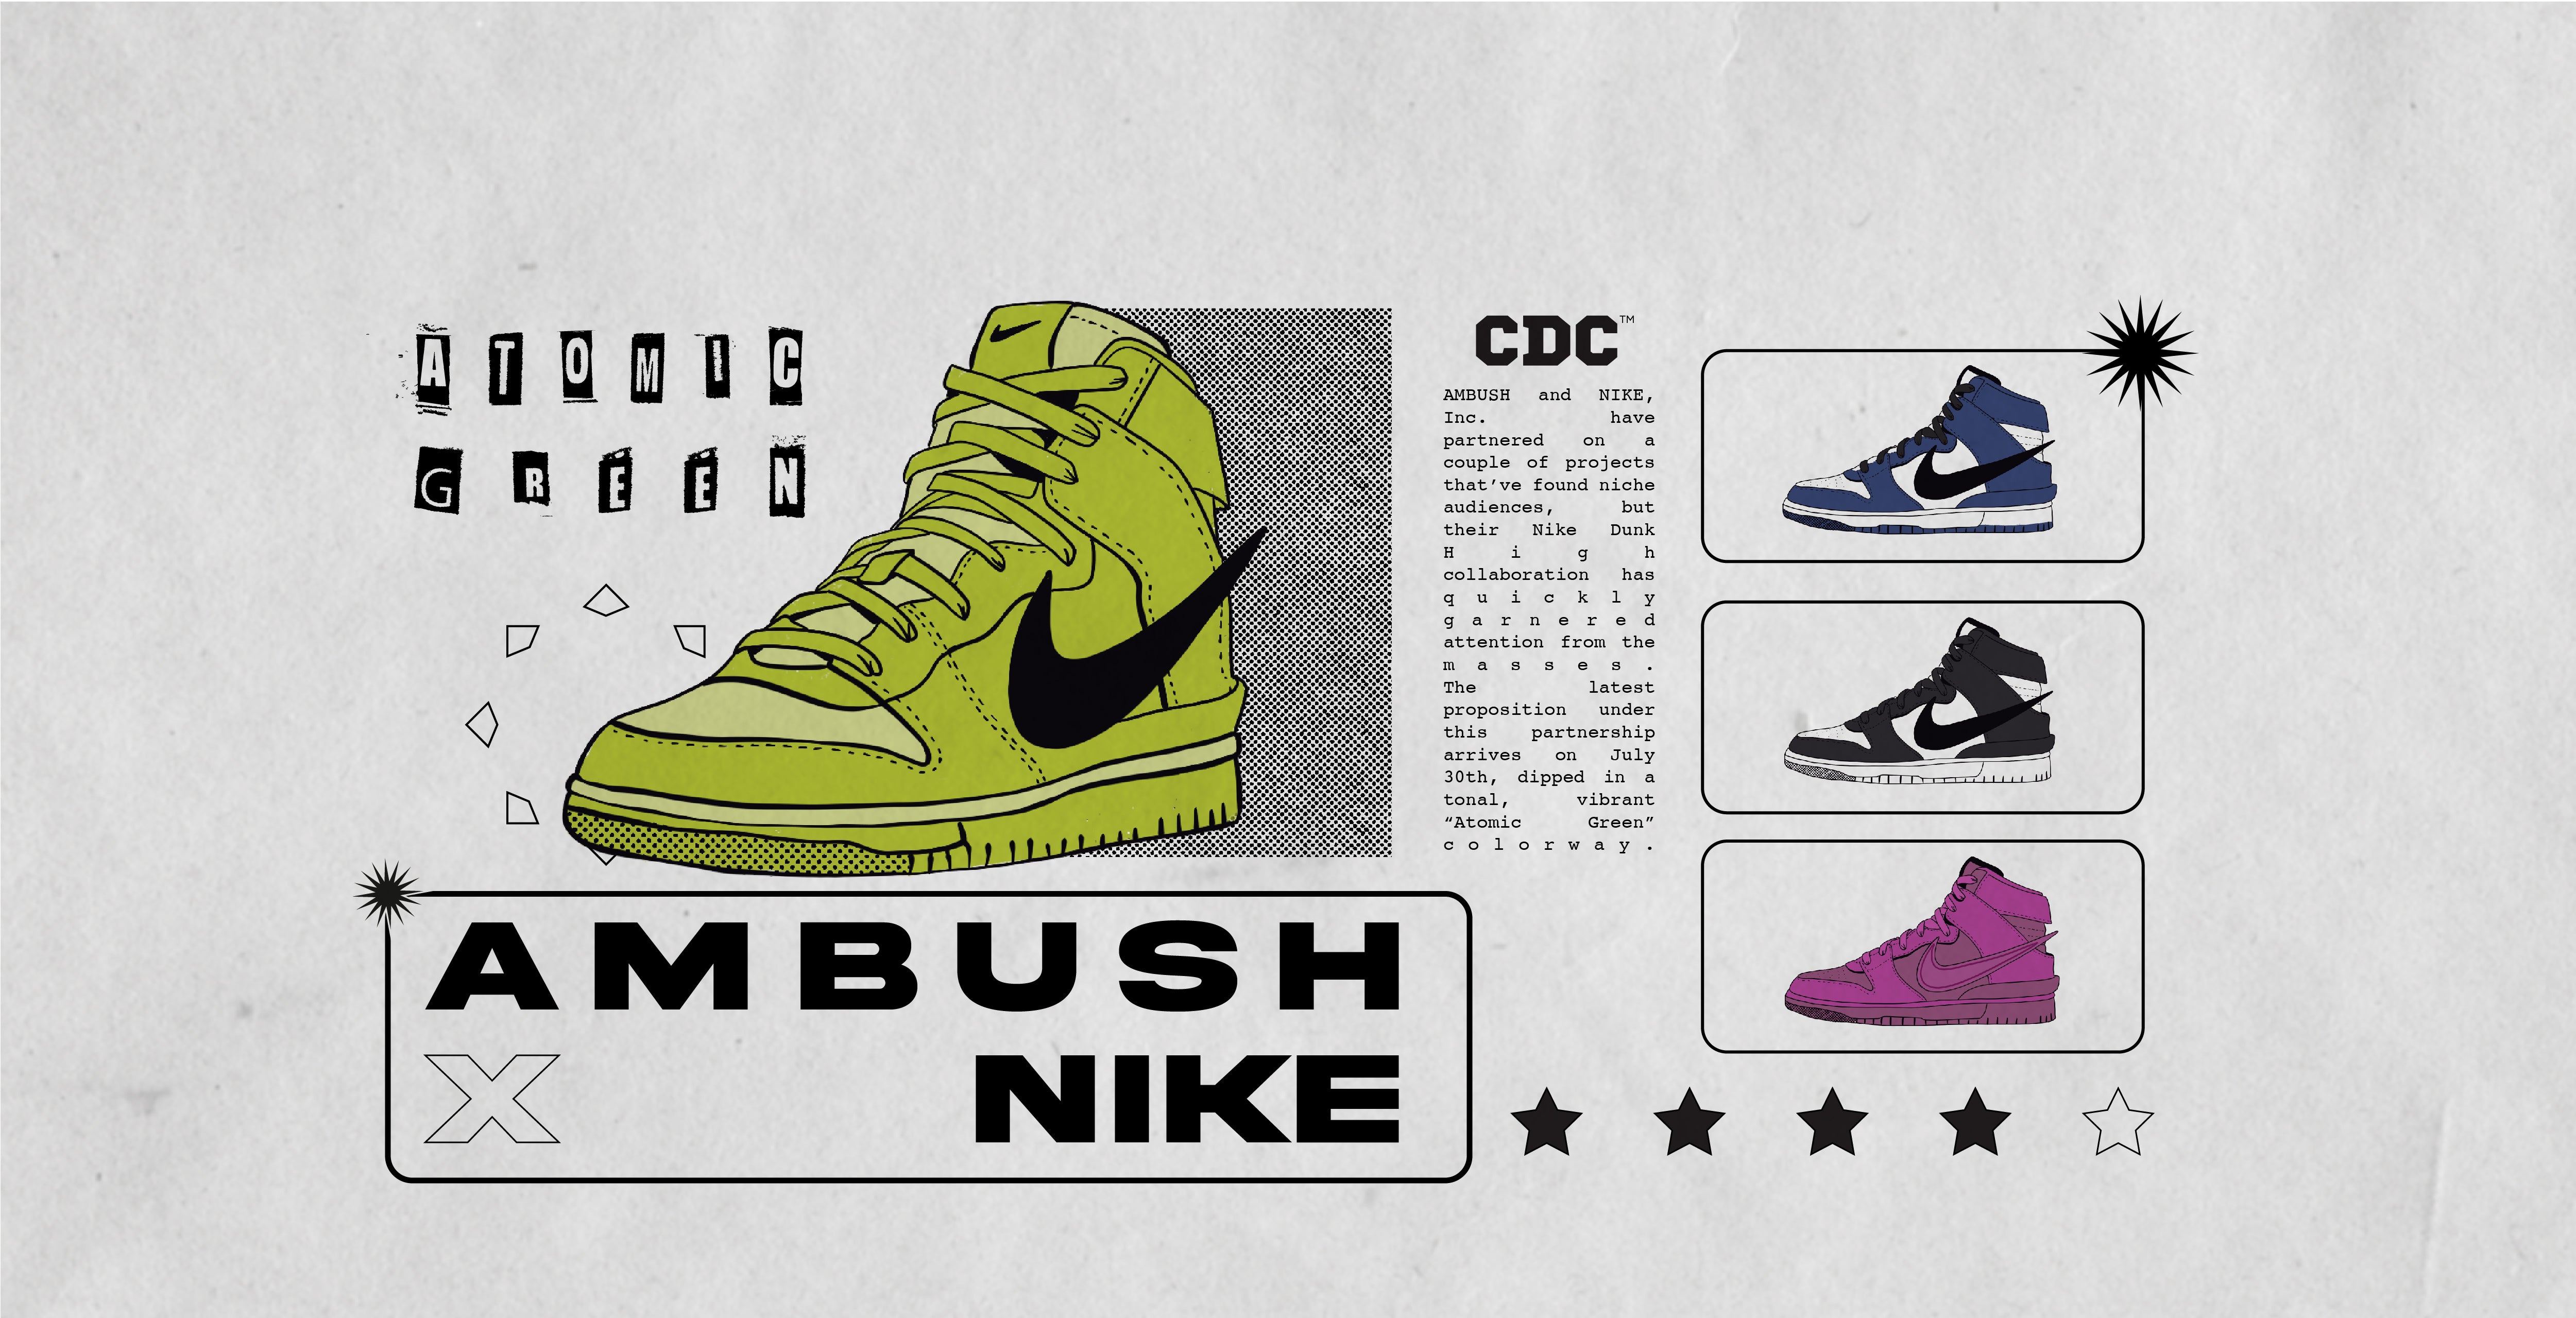 Nike Dunk High x Ambush